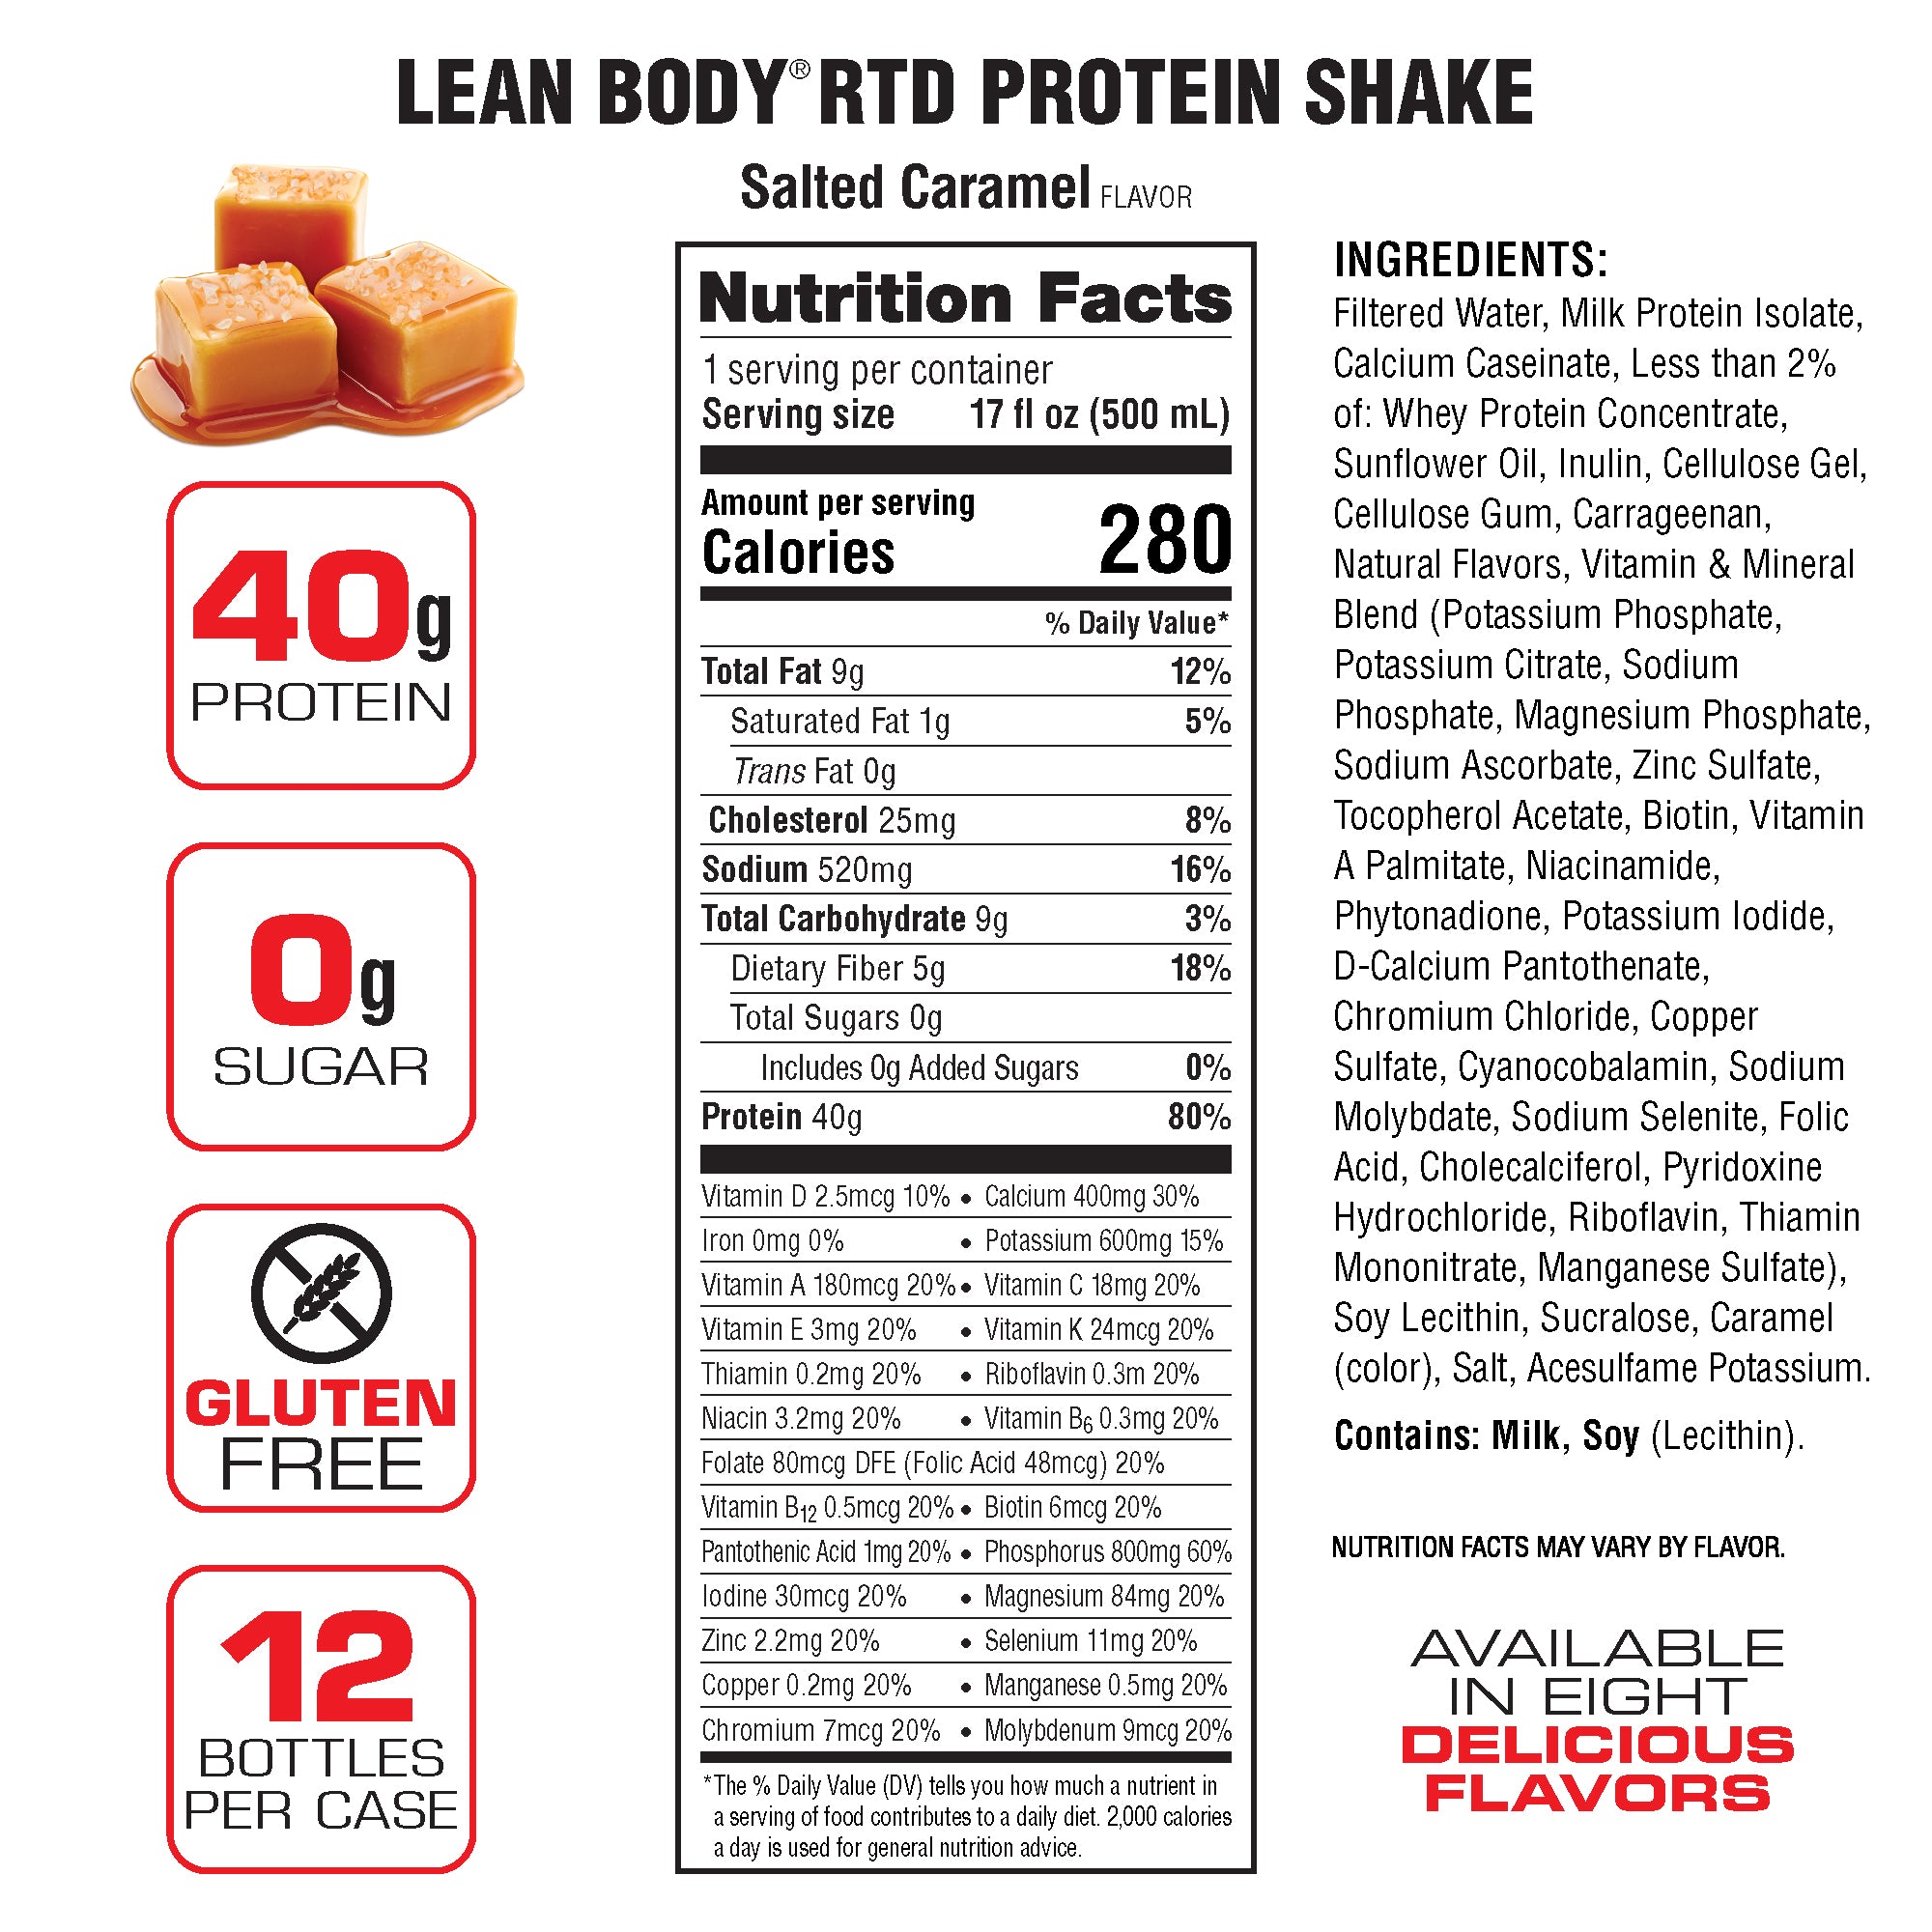 13.5 oz Small Protein Shaker Bottle - Body Nutrition